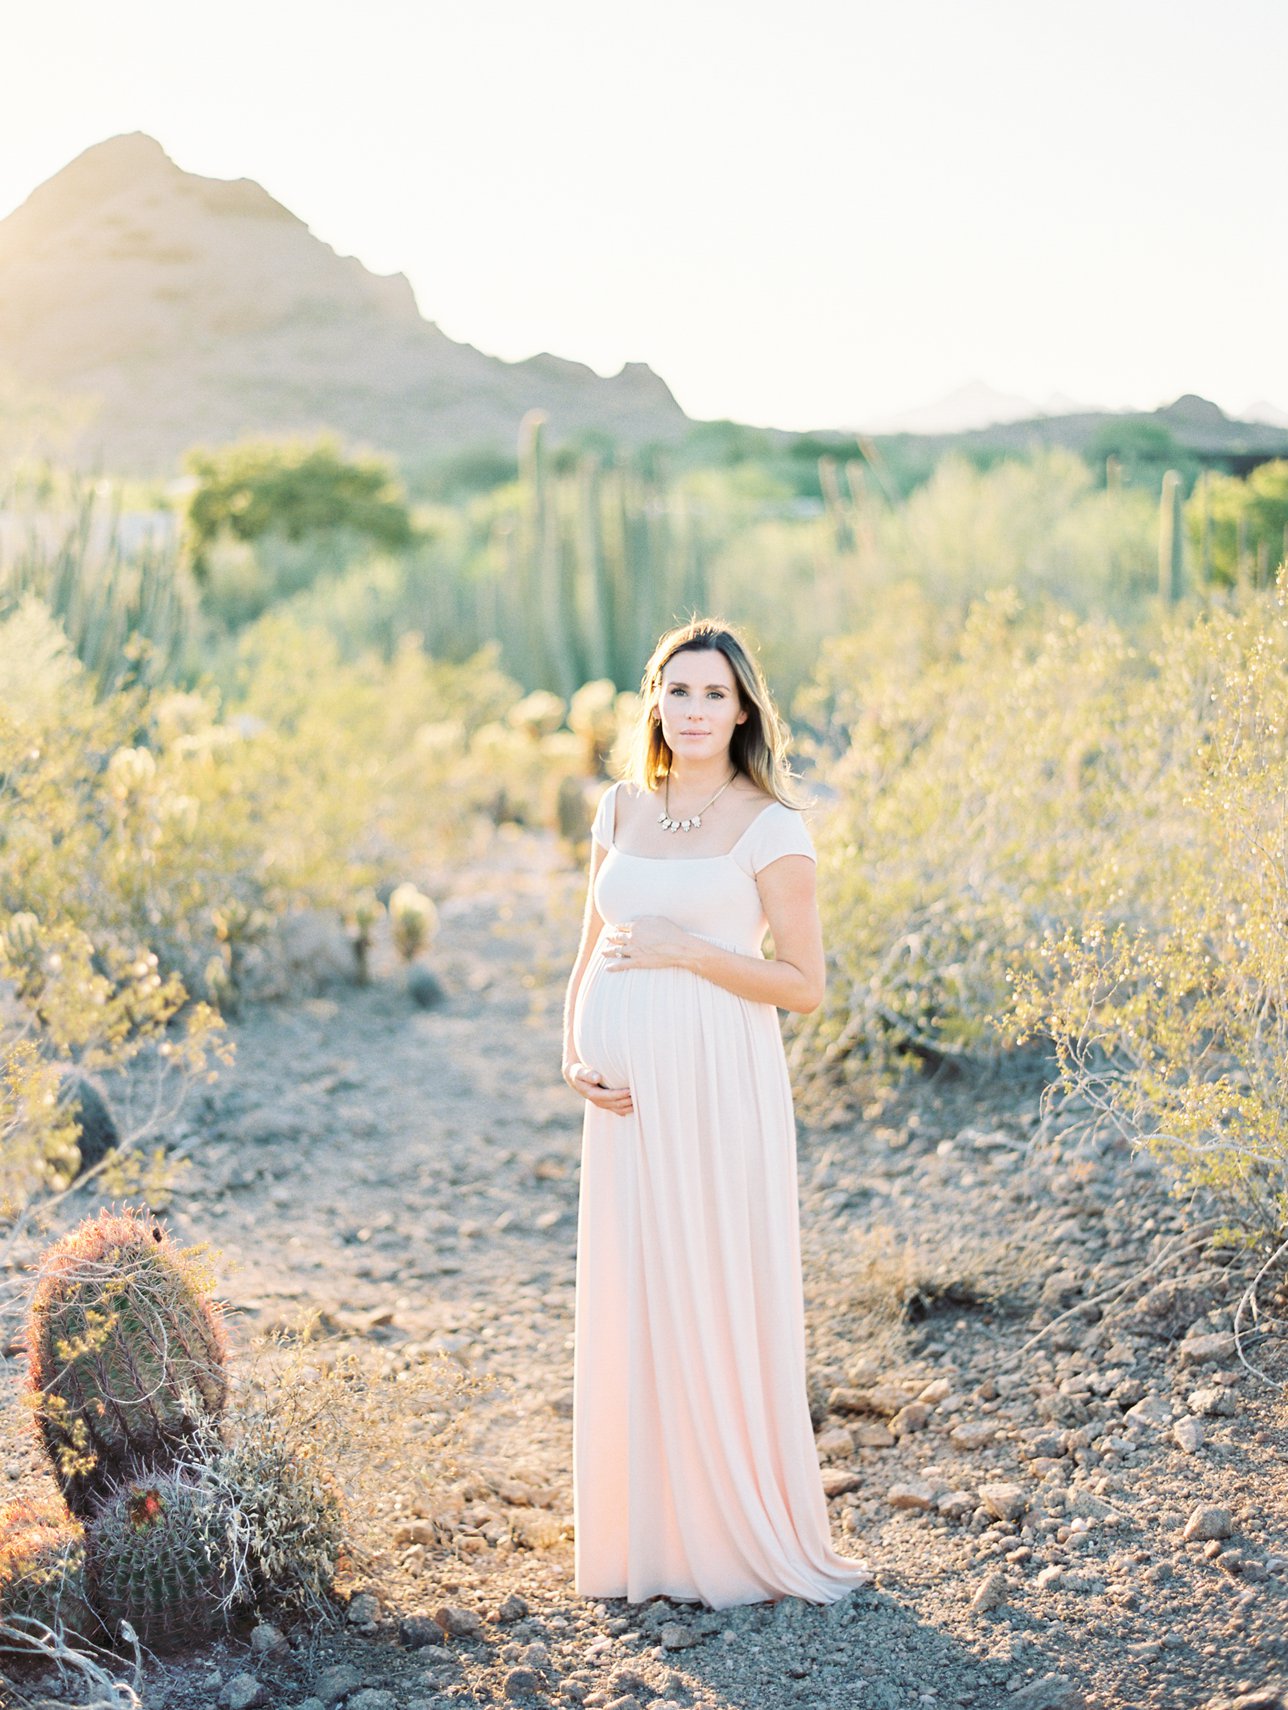 Desert maternity photos - Rachel Solomon Photography